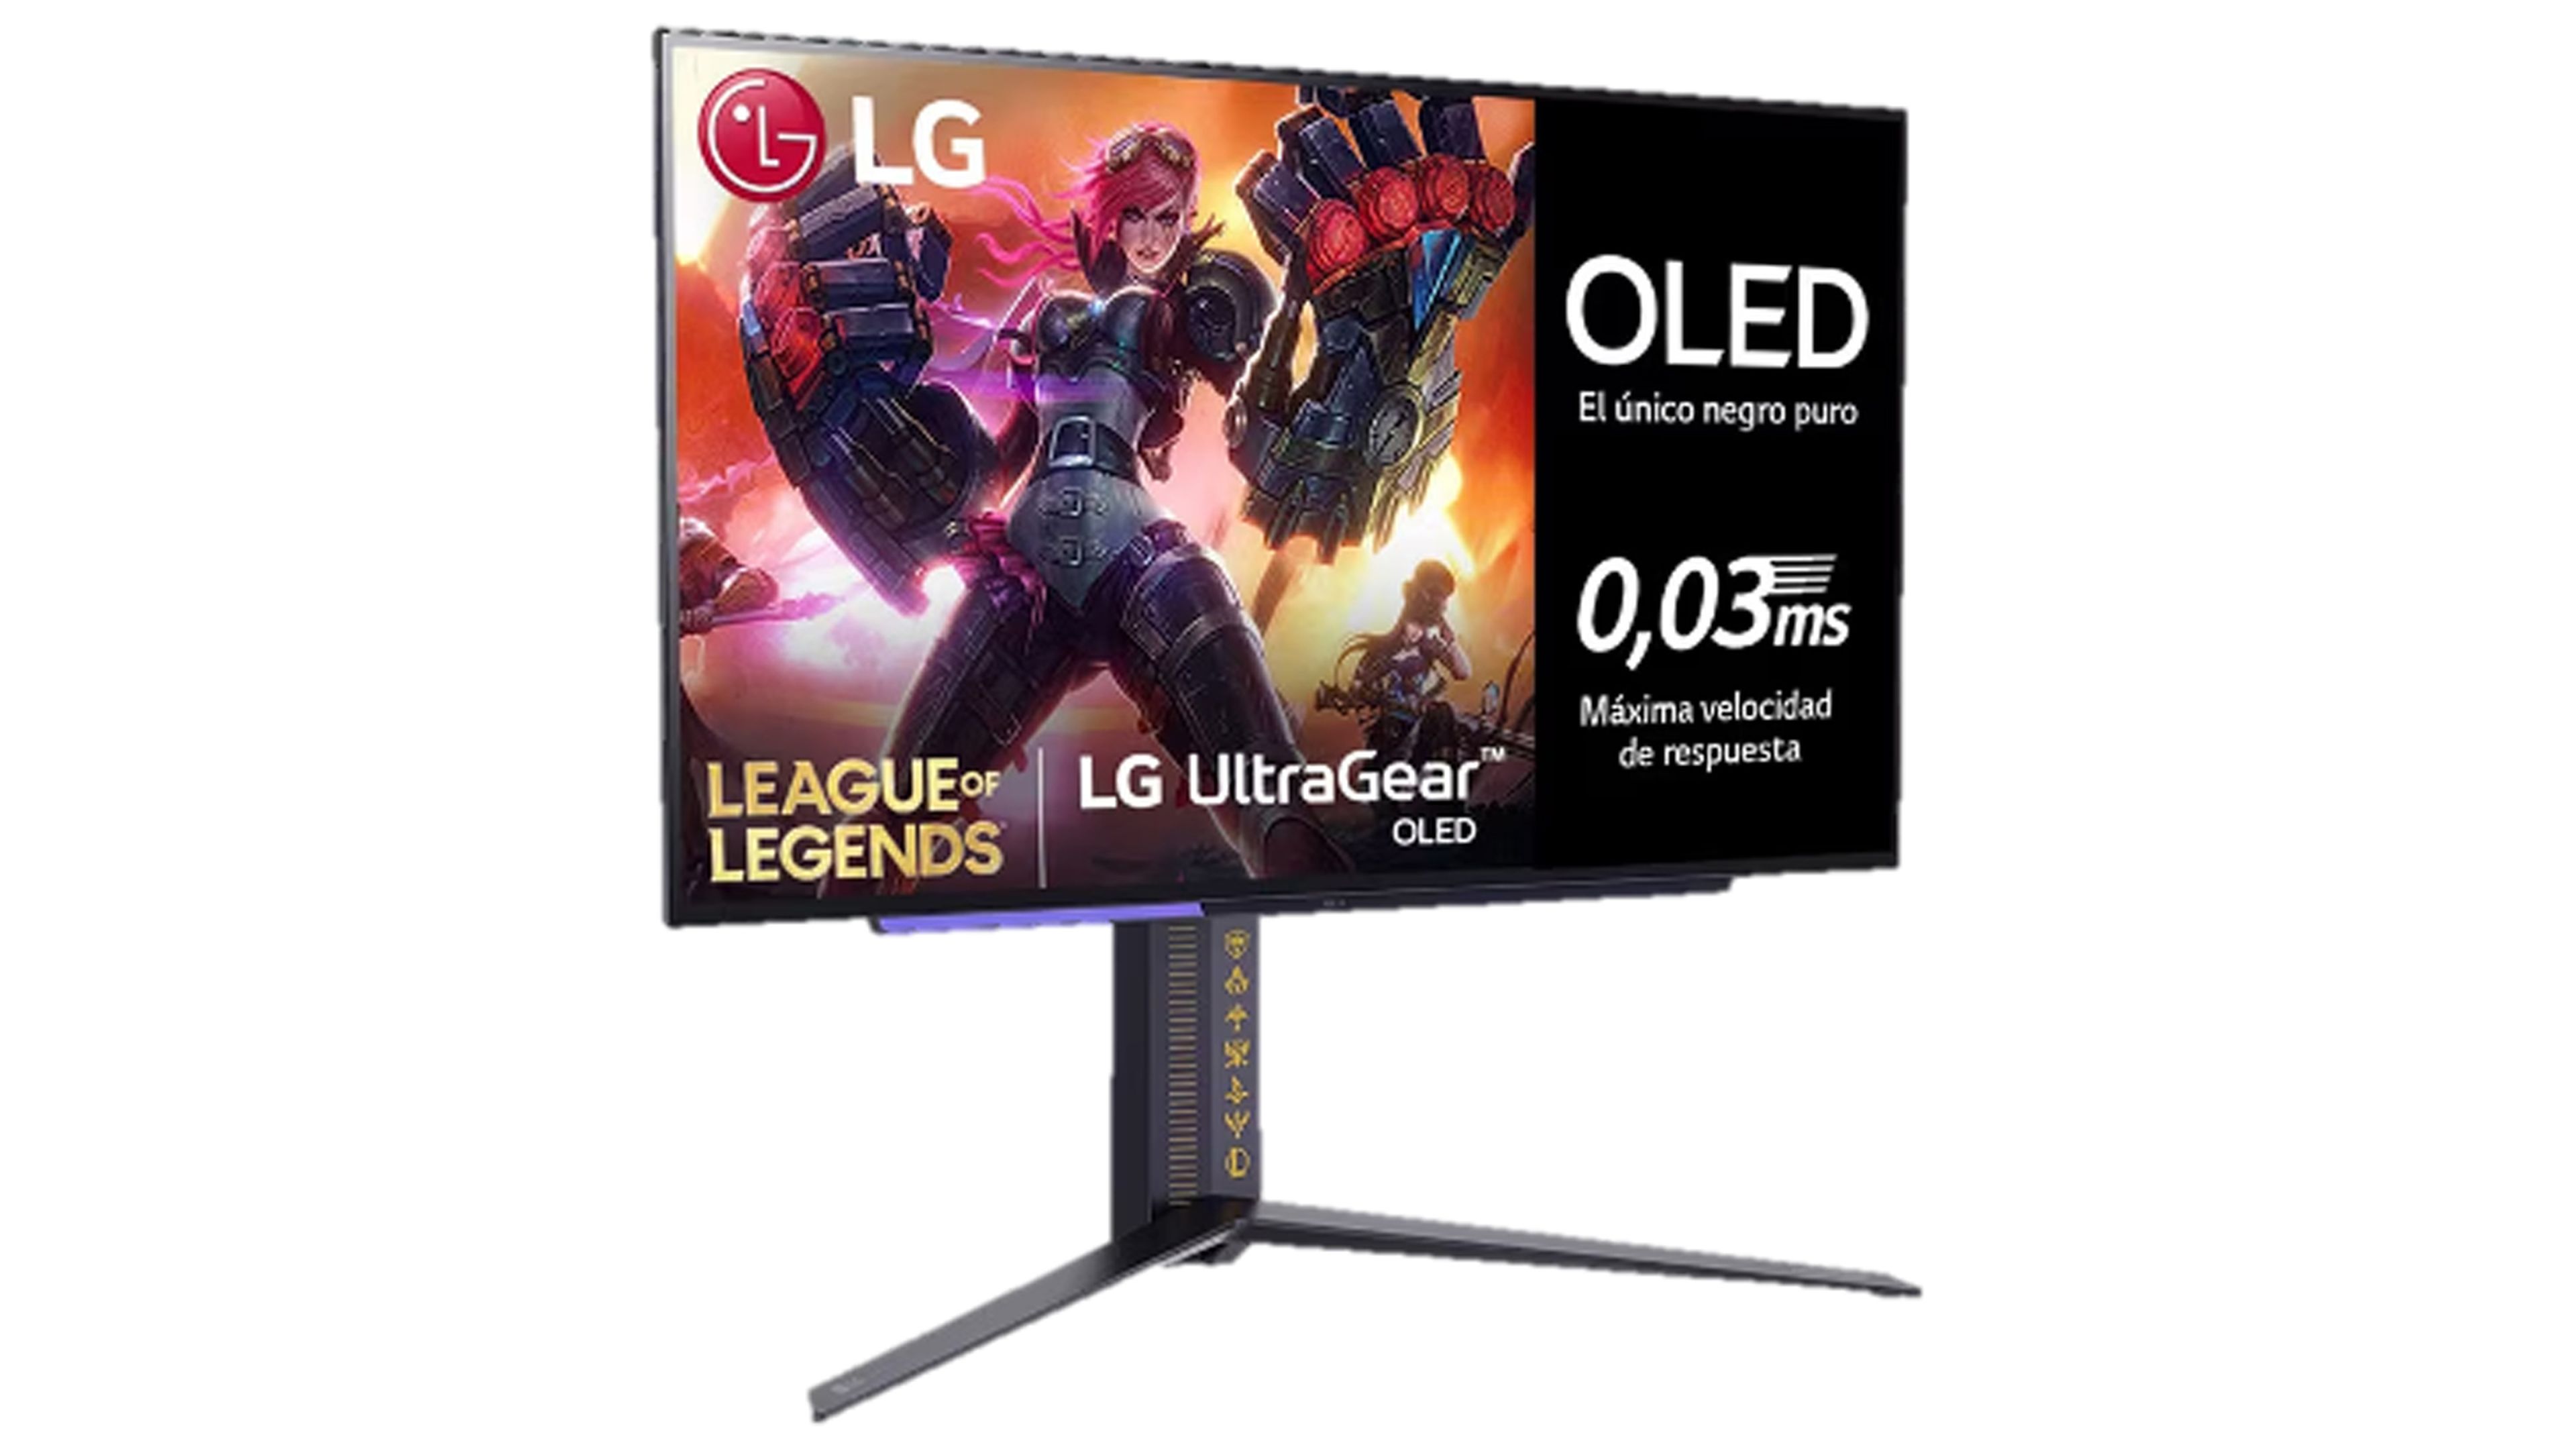 LG UltraGear OLED League of Legends 27 pulgadas